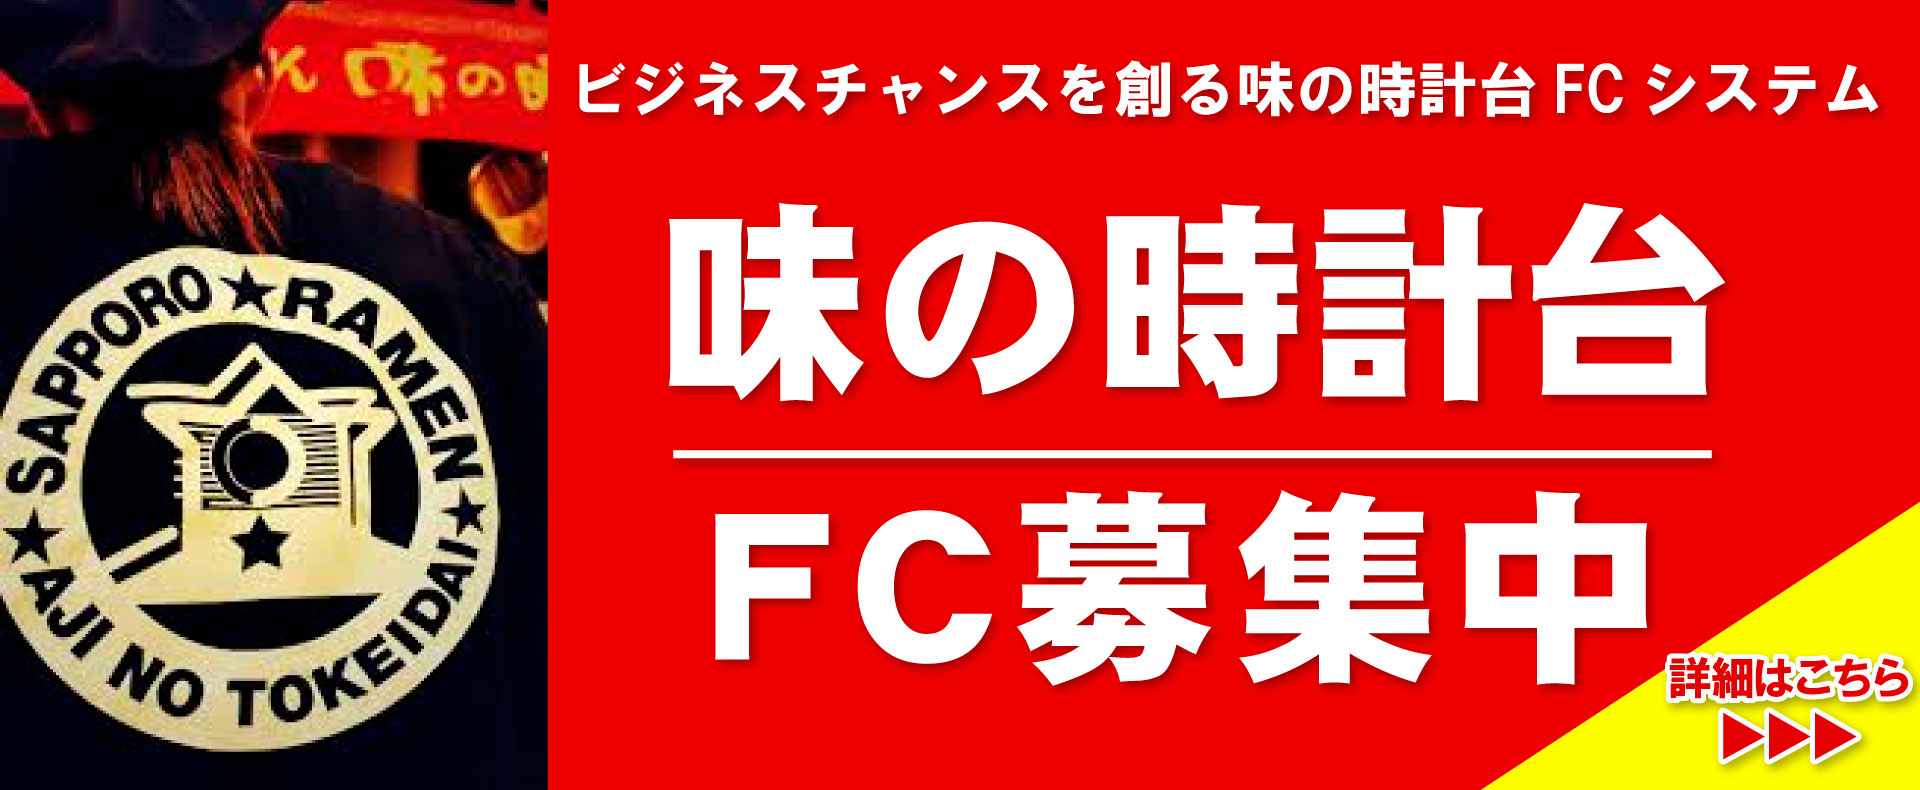 FC情報